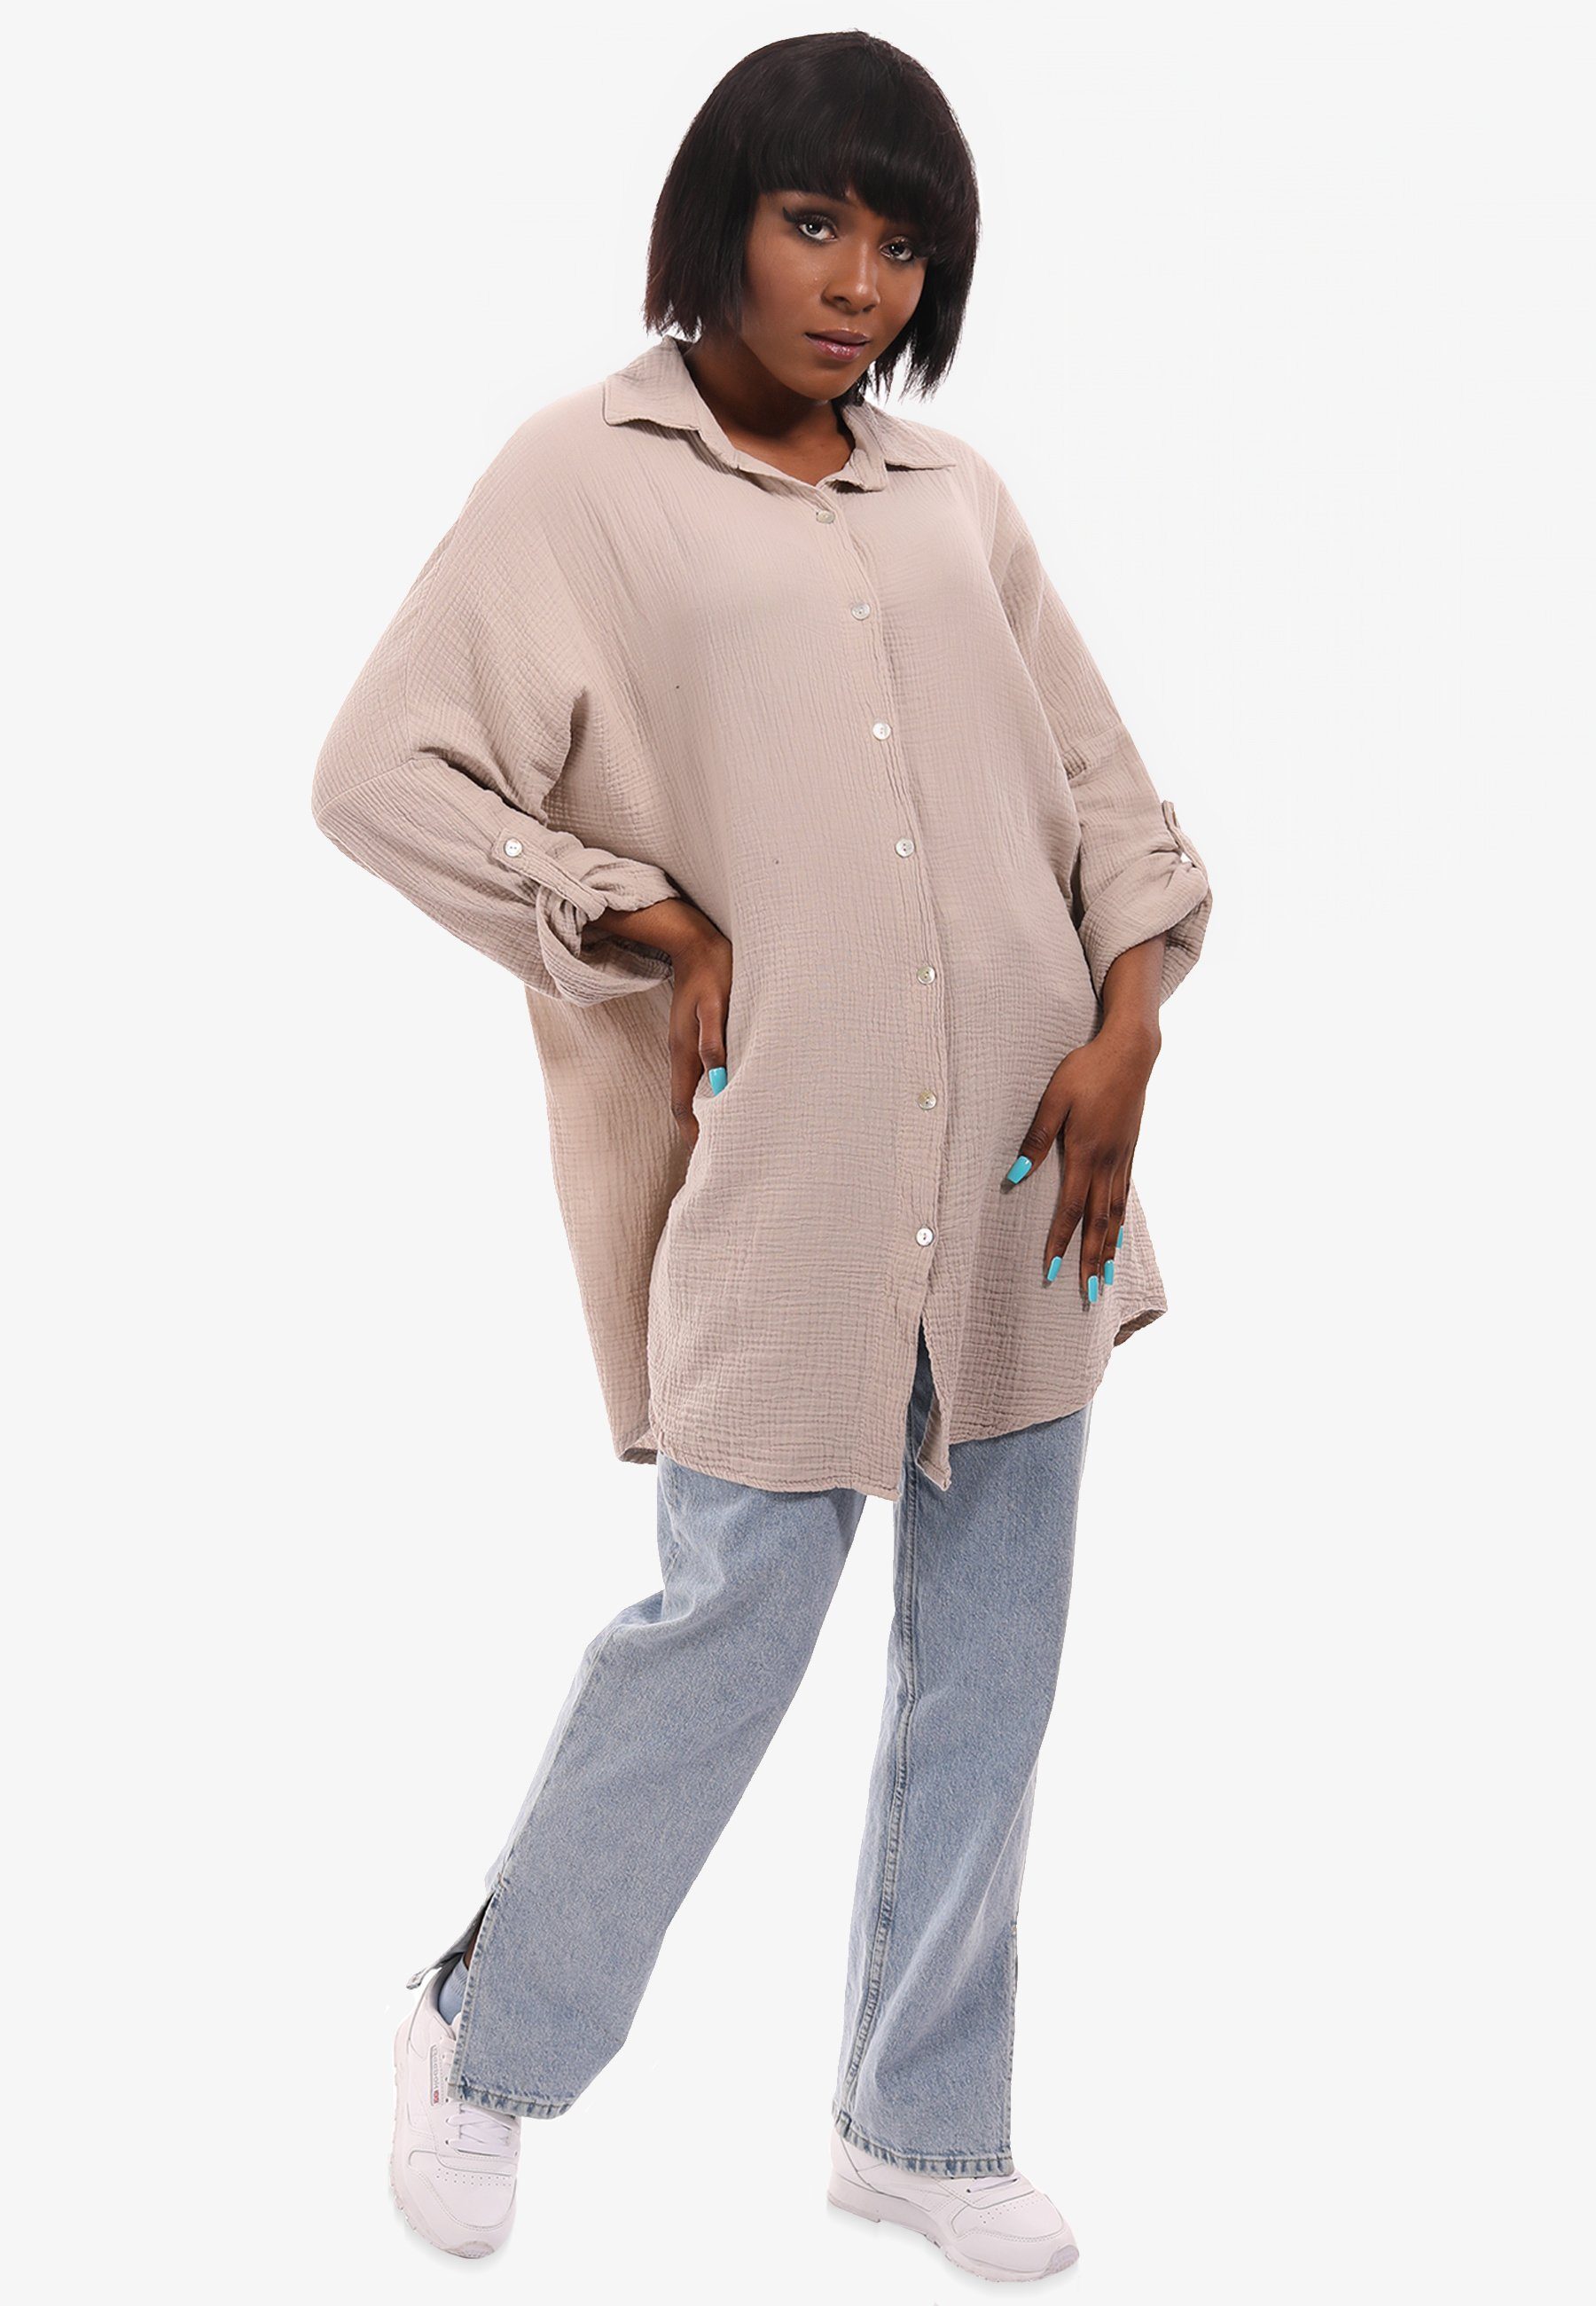 in YC XXL Style & Bluse Look Rückenmotiv beige Fashion One Size in Long Longbluse Oversized mit Unifarbe